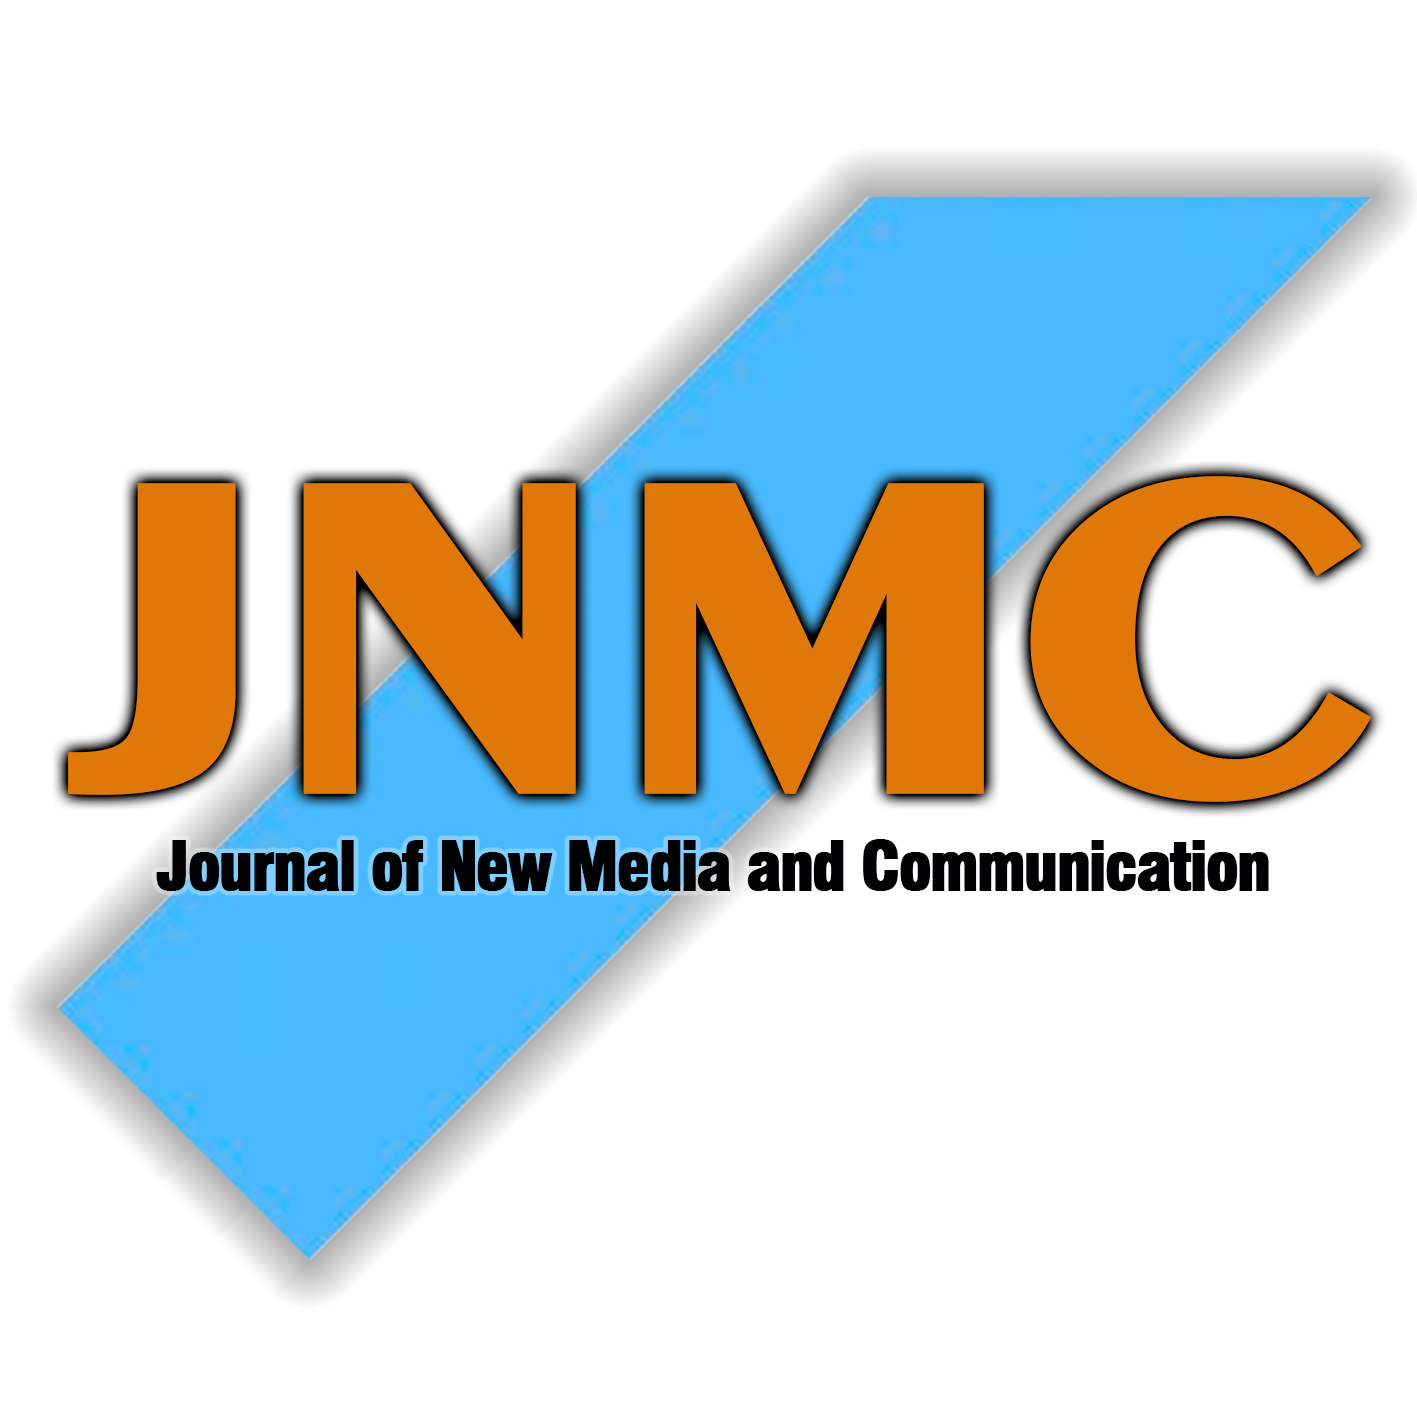 JNMC: Journal of New Media and Communication